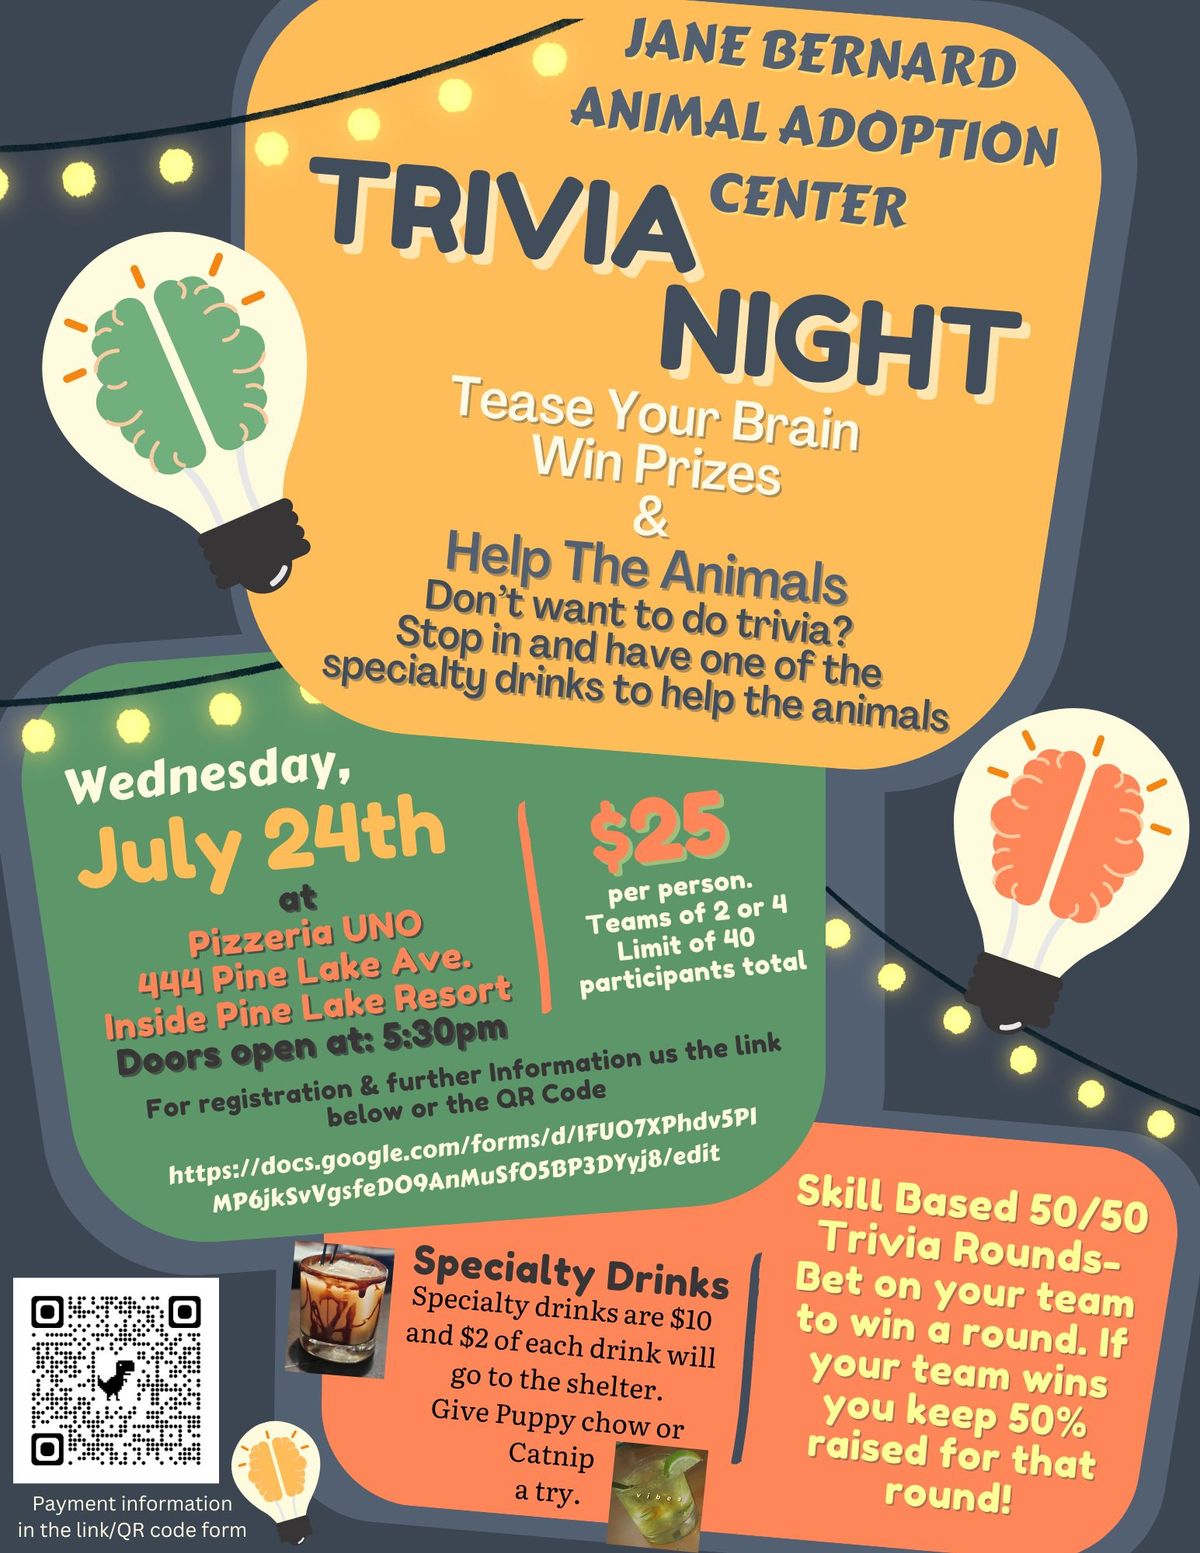 Trivia Night for the Jane Bernard Animal Adoption Center